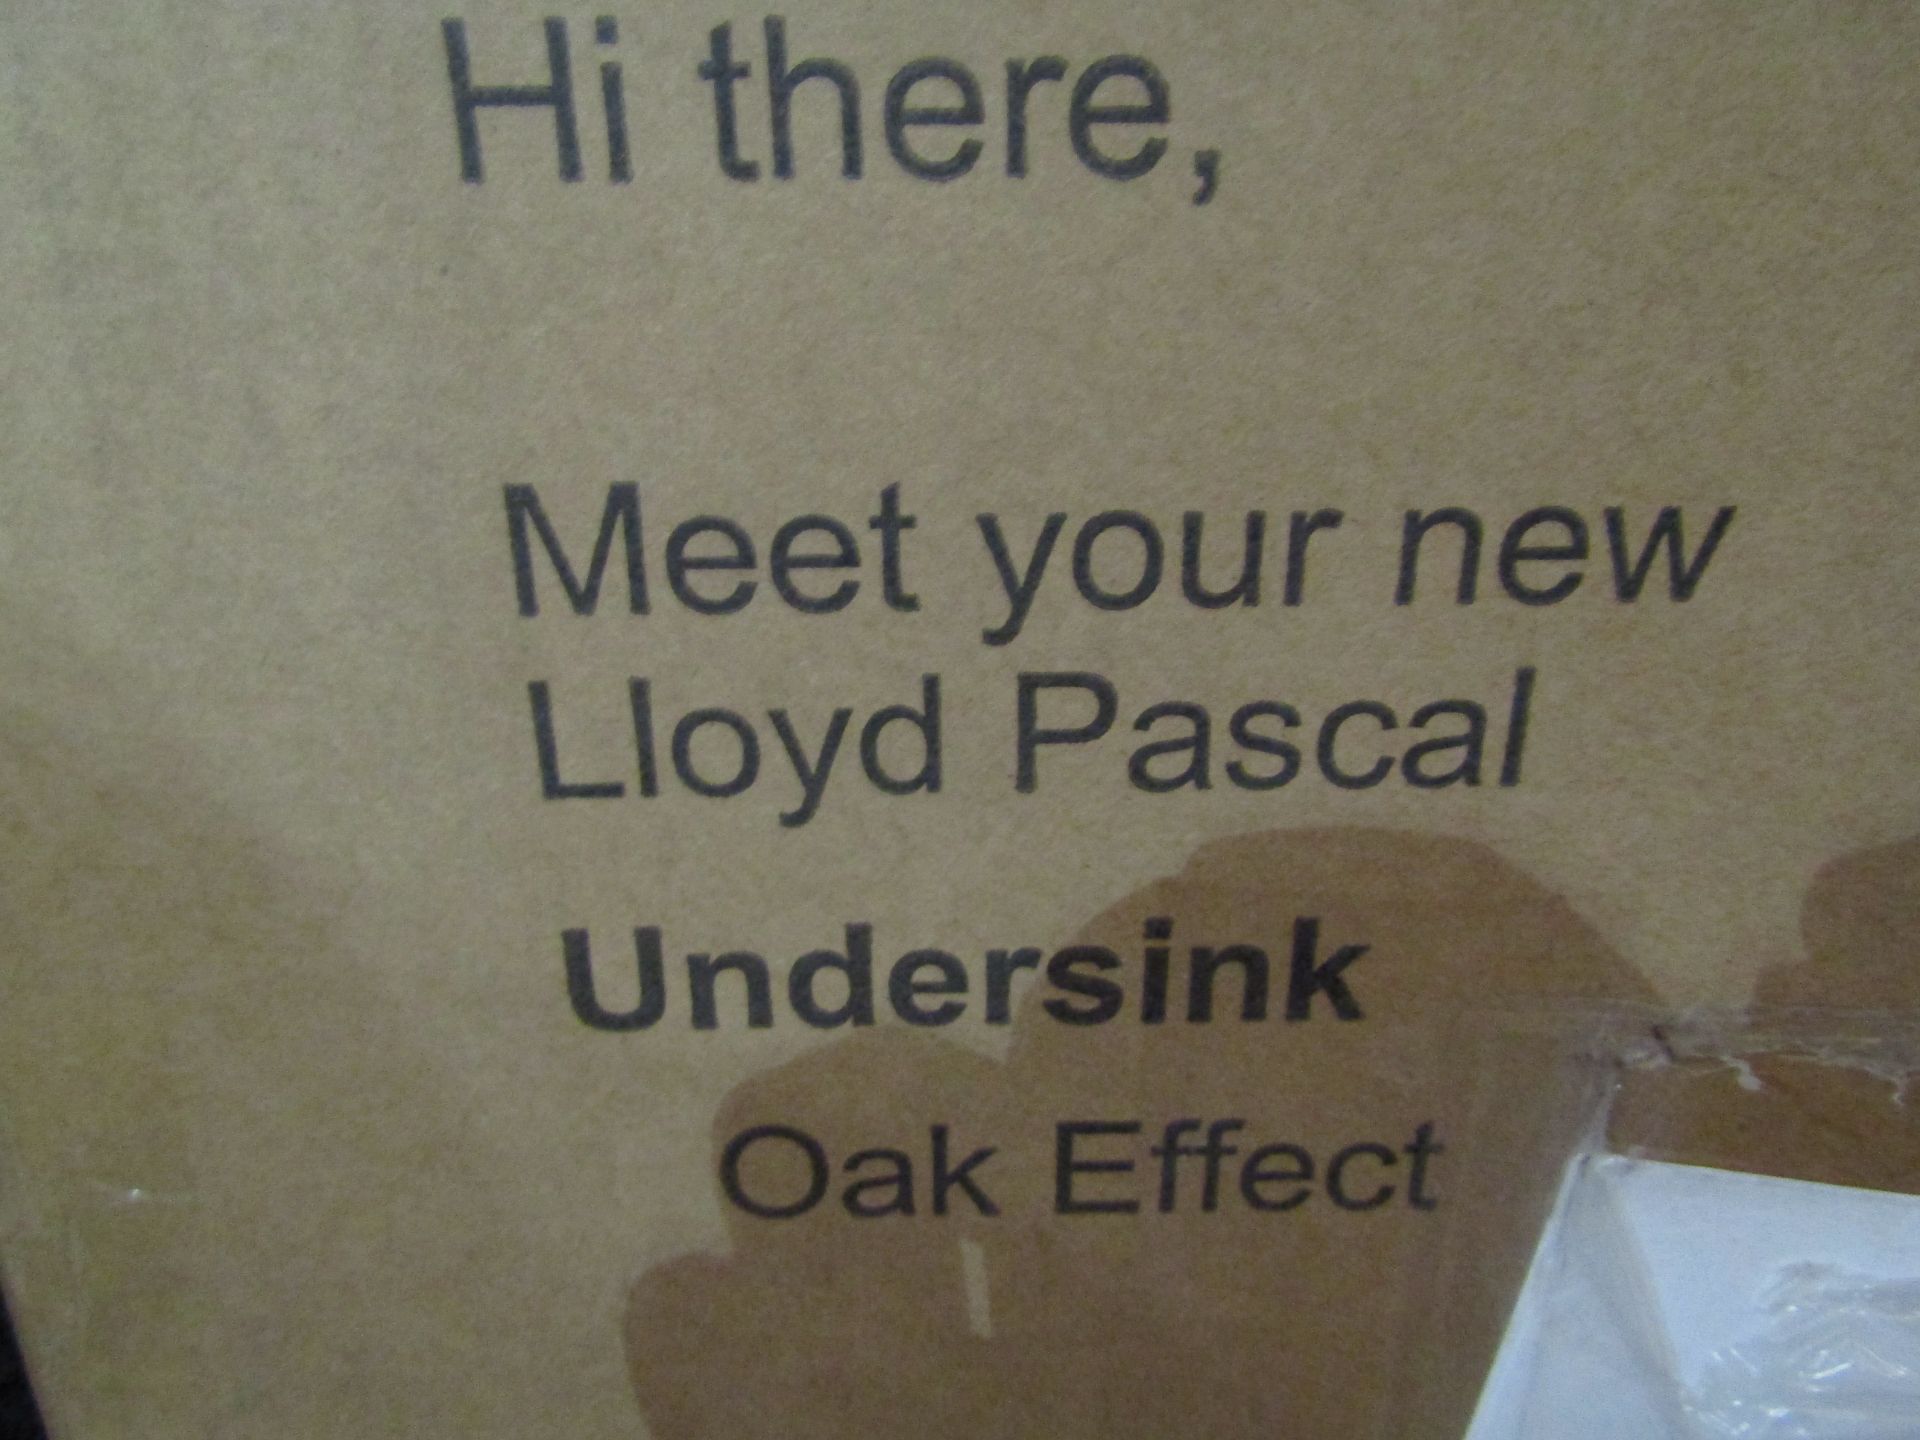 Lloyd Pascal Undersink, Oak Effect. RRP £49 - Image 2 of 2